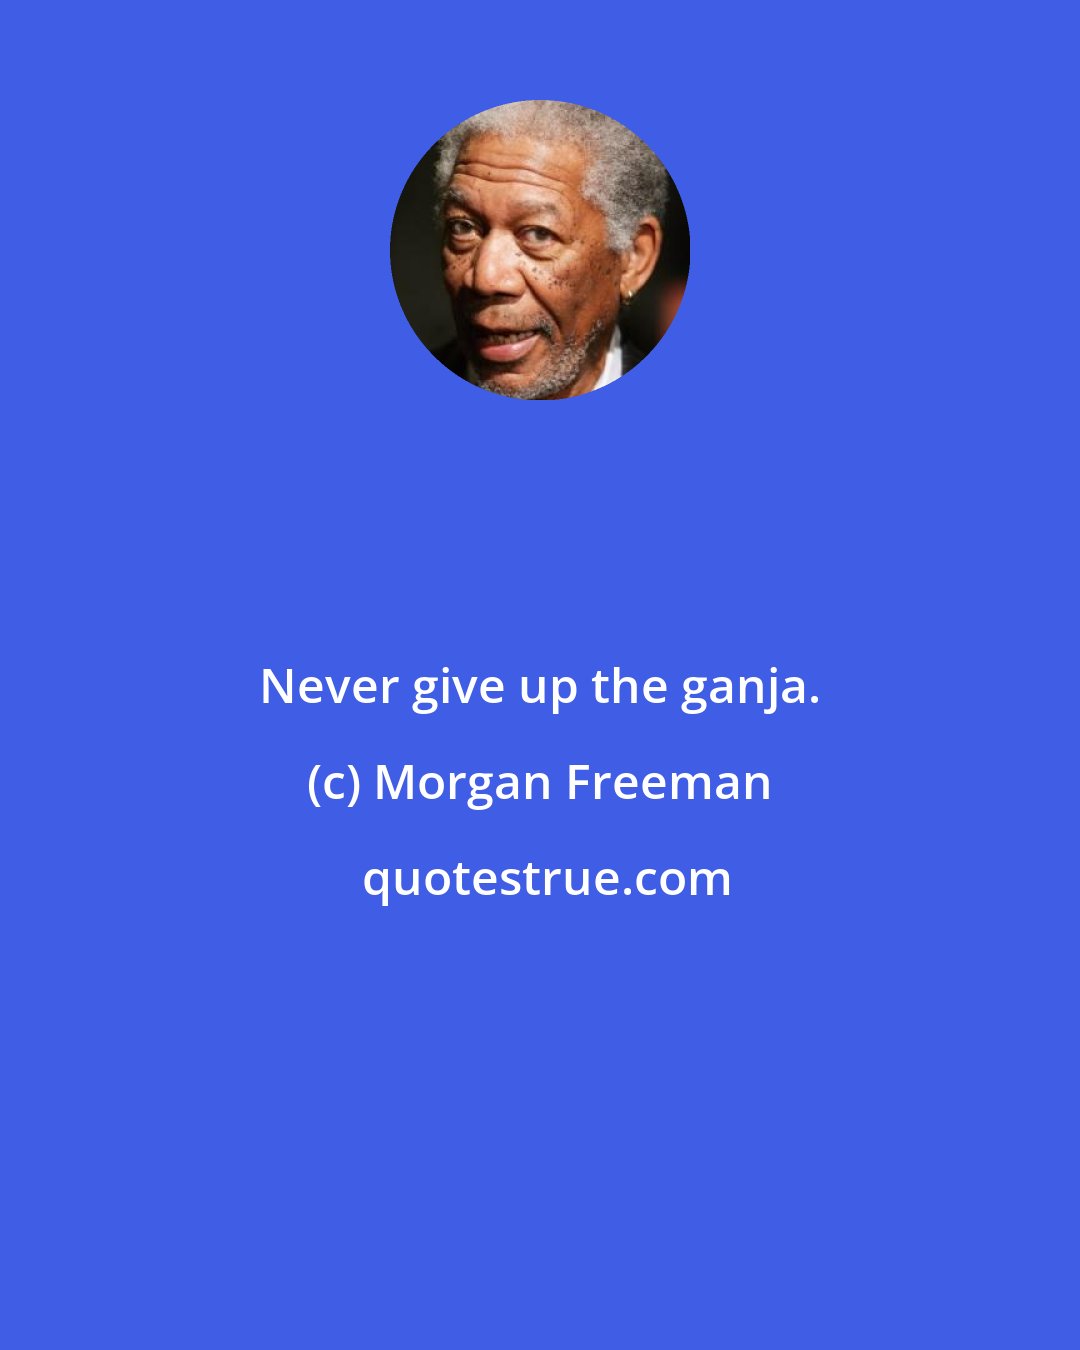 Morgan Freeman: Never give up the ganja.